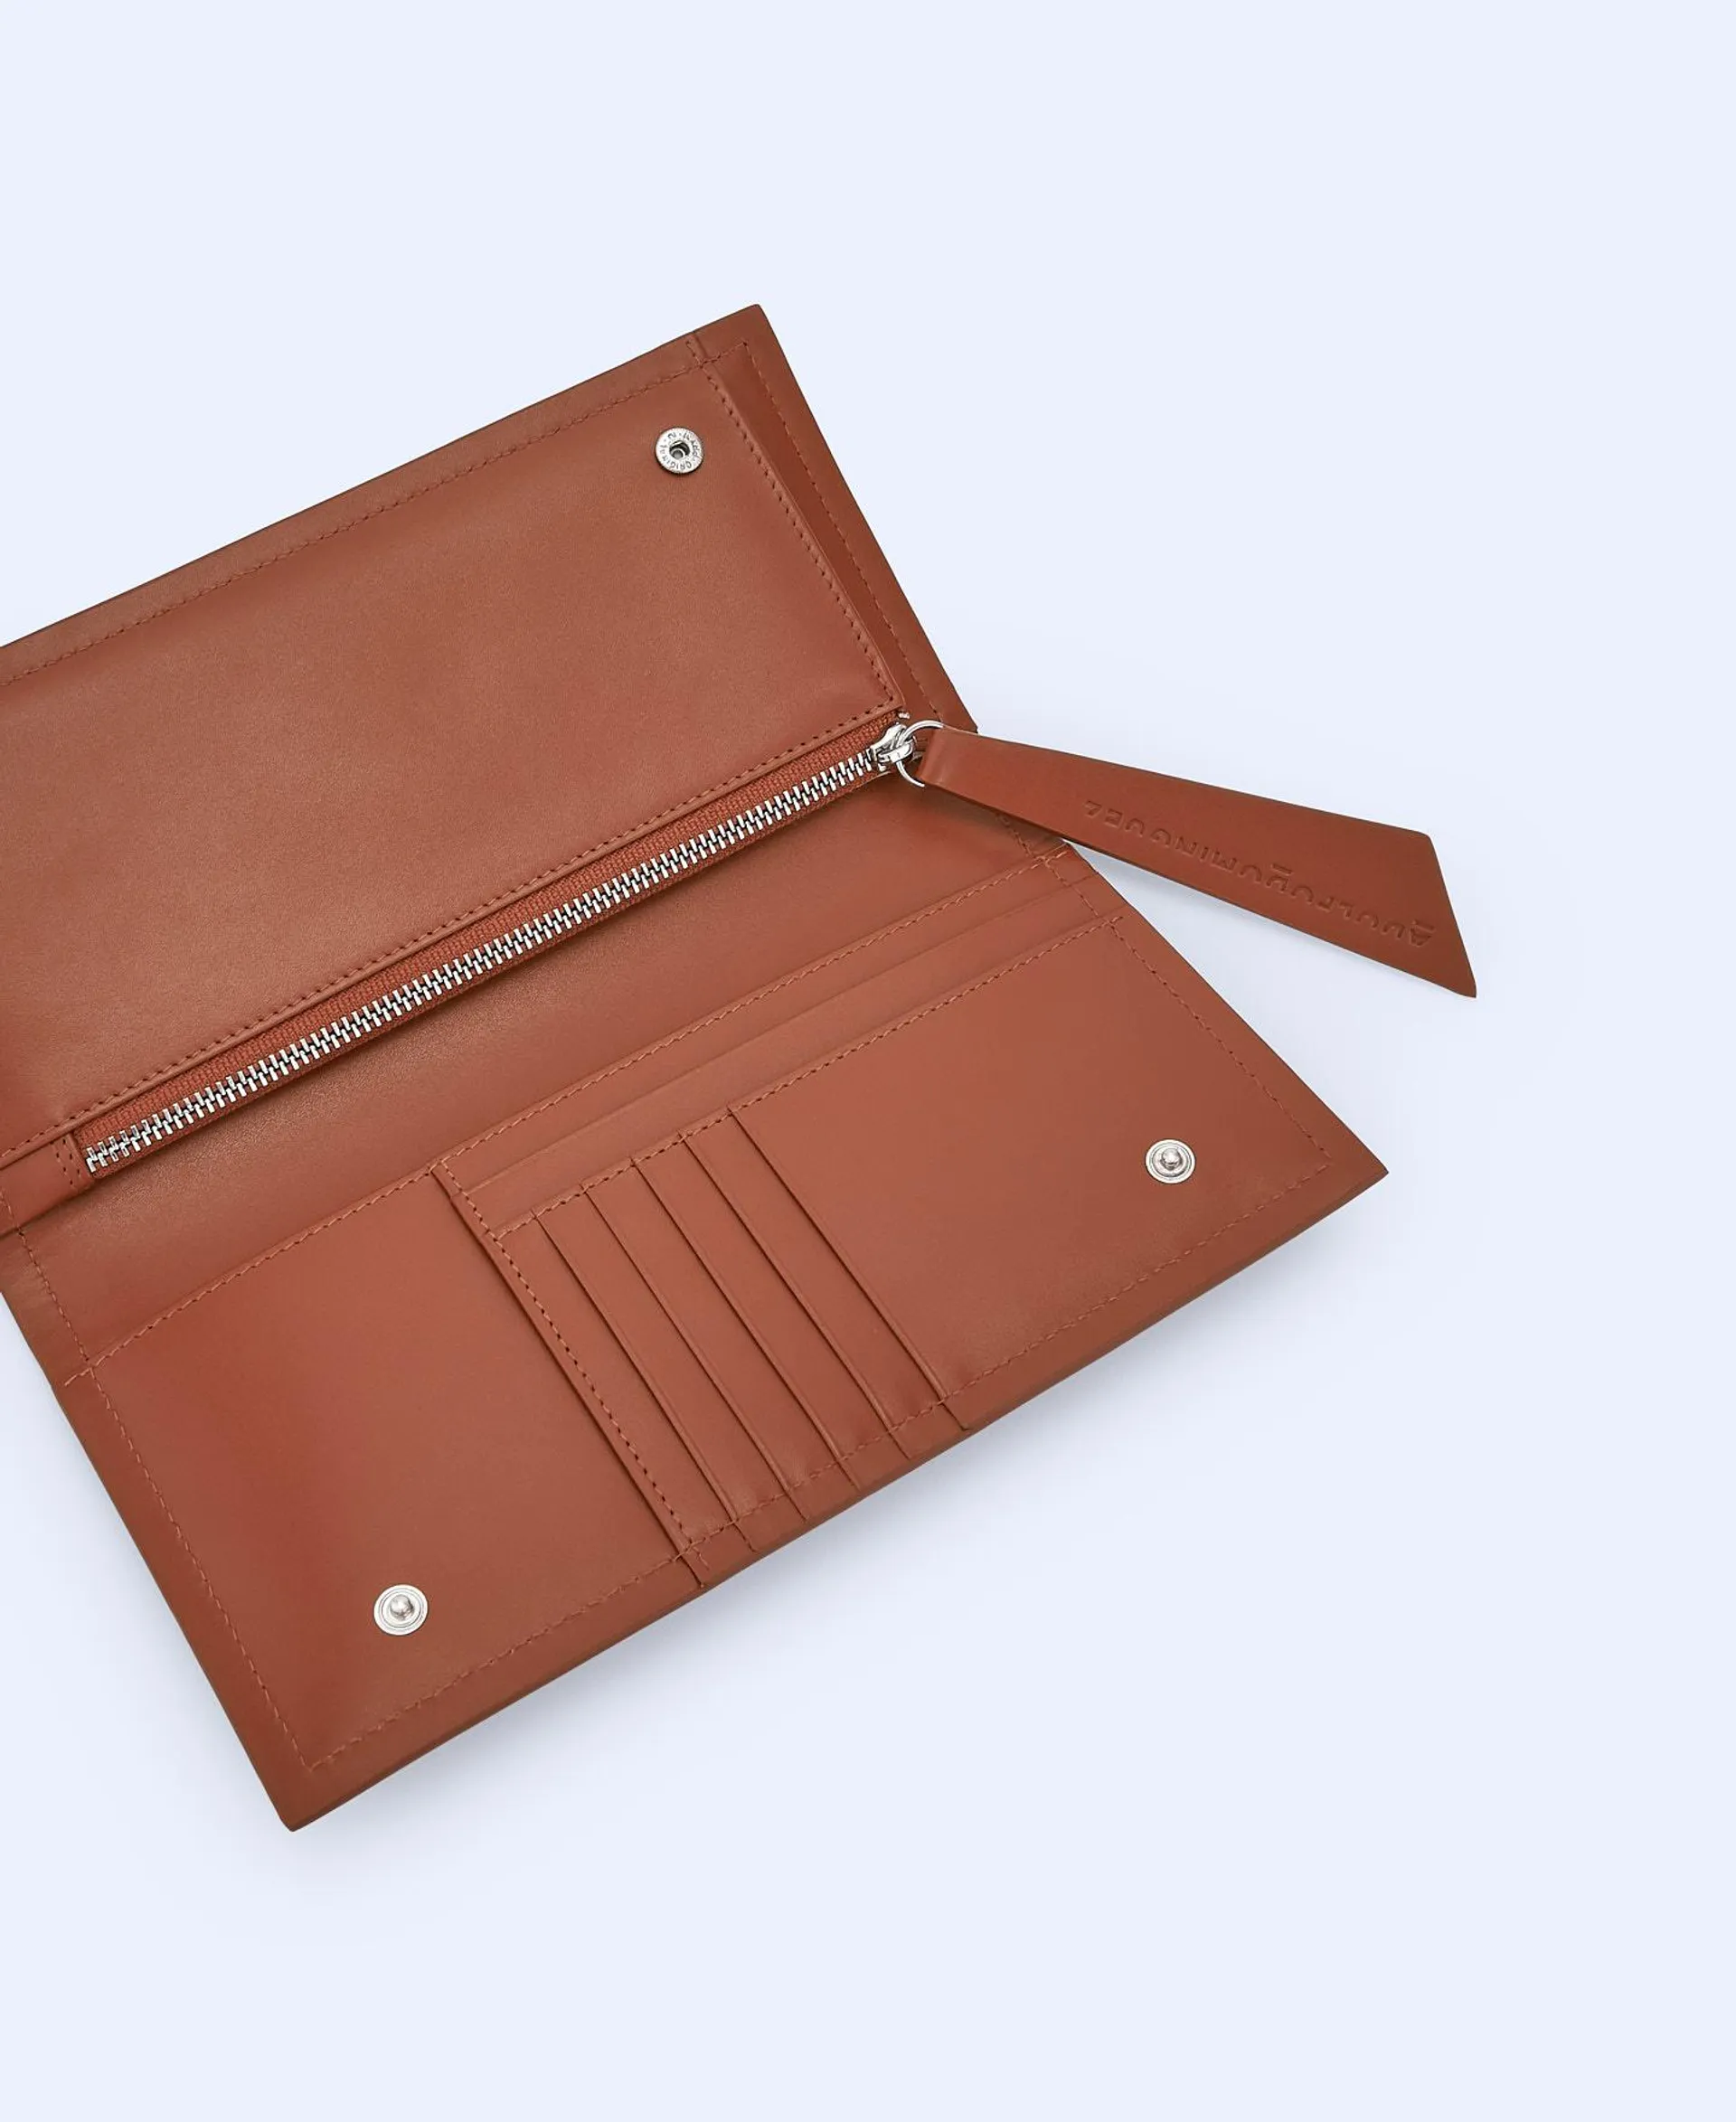 Lapel leather wallet